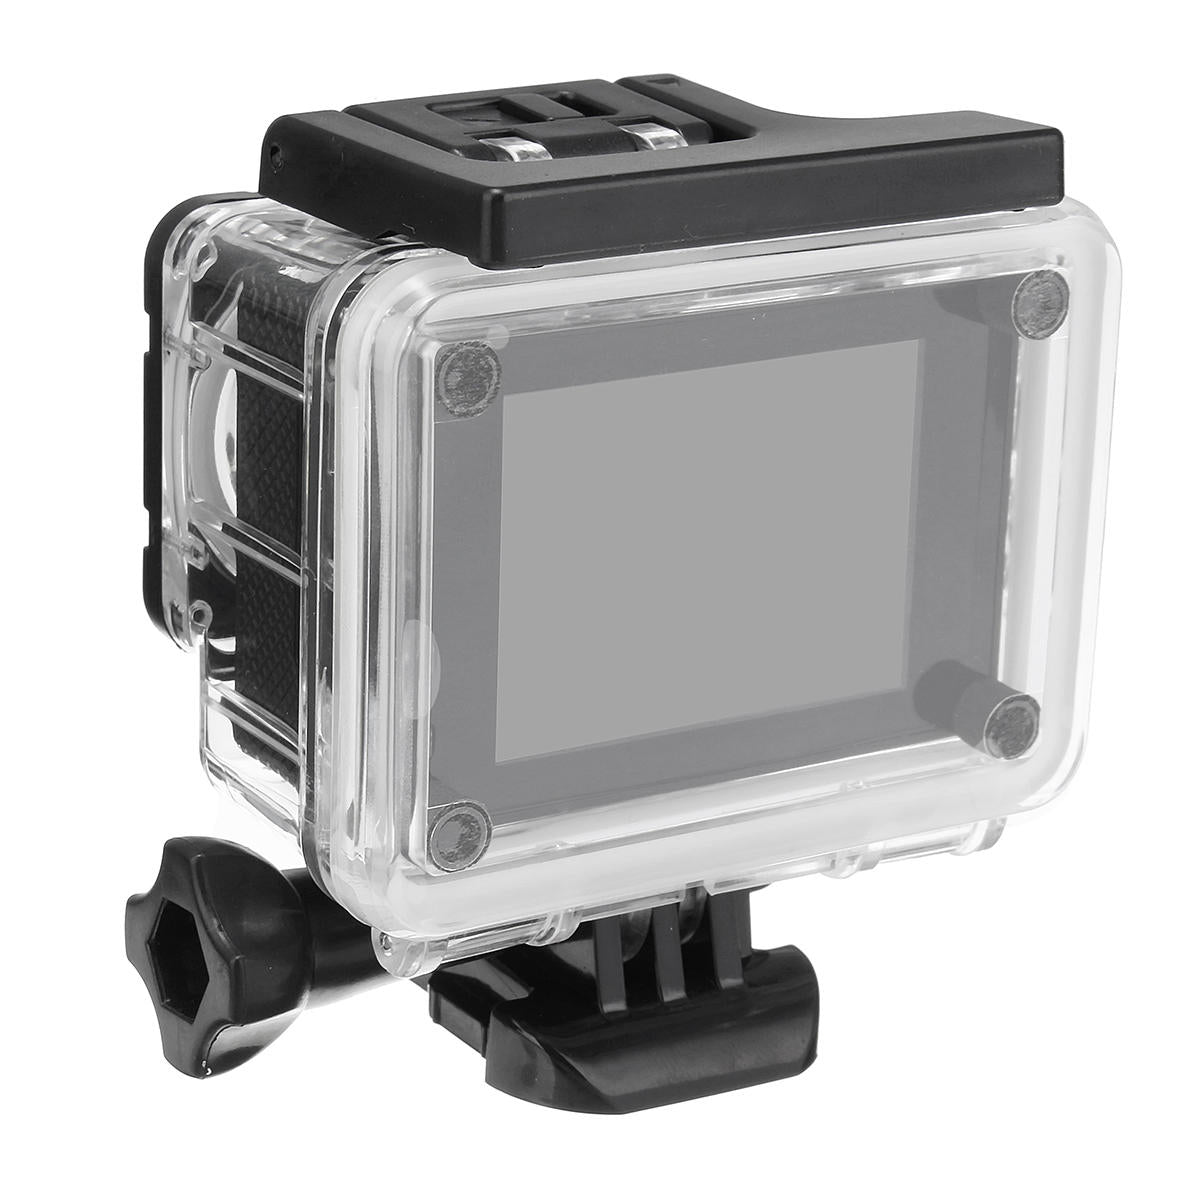 WIFI Remote Action Camera 1080P Mini Ultra HD 4K Sports DV Waterproof